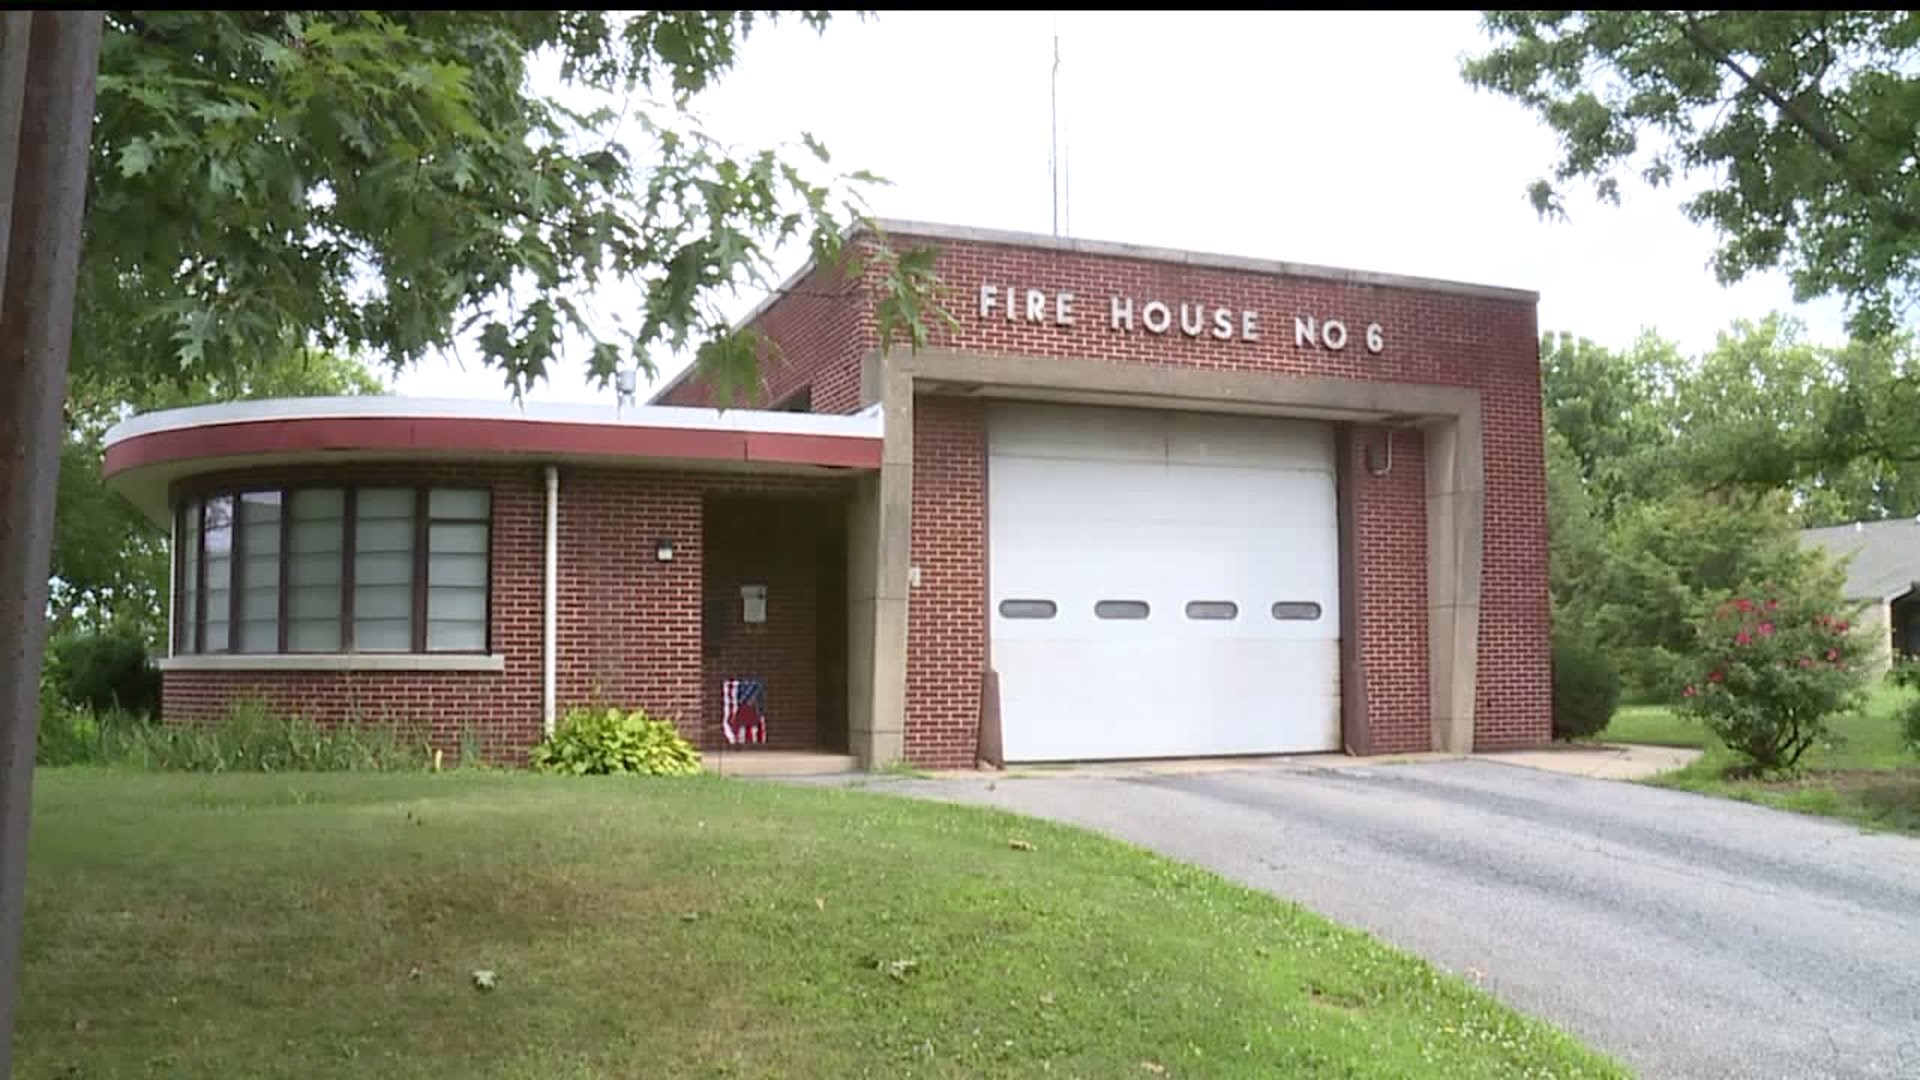 Lancaster City closes fire house